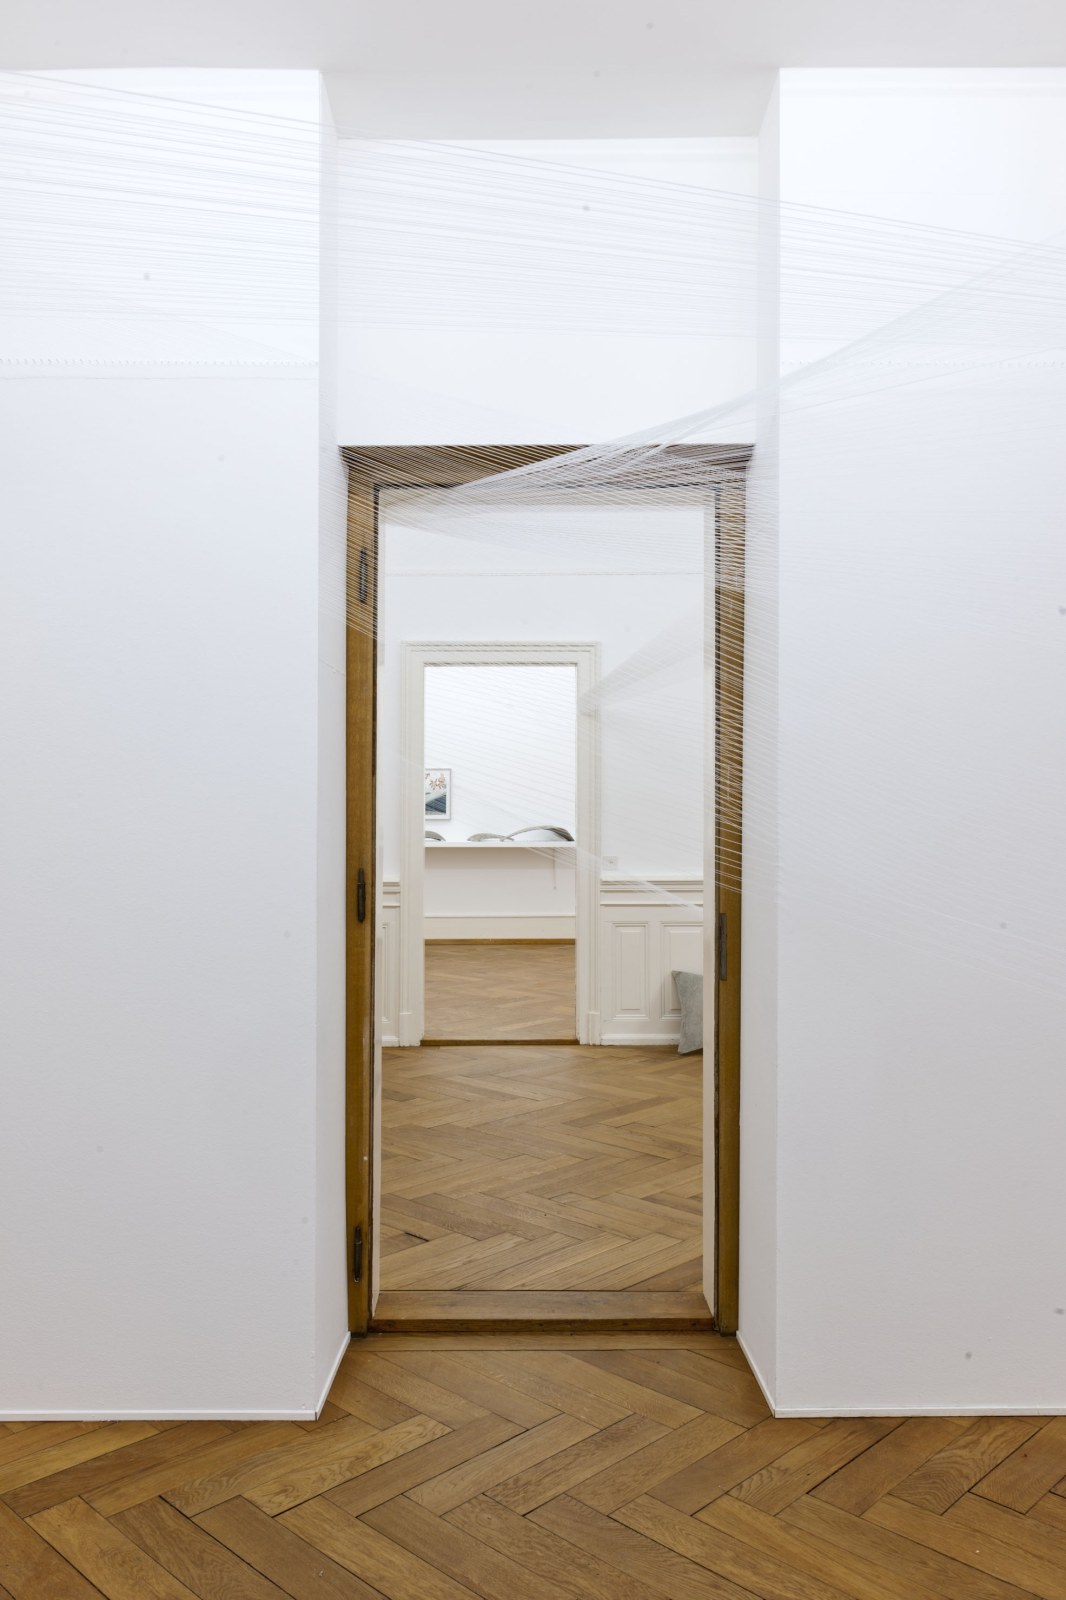 <div class="image_caption_container"><div class="image_caption"><p>Exhibition view, </p><p><strong>Mittelland</strong>, Kunsthalle Langenthal, Switzerland, 2010</p><p>© Marc Latzel</p></div></div>